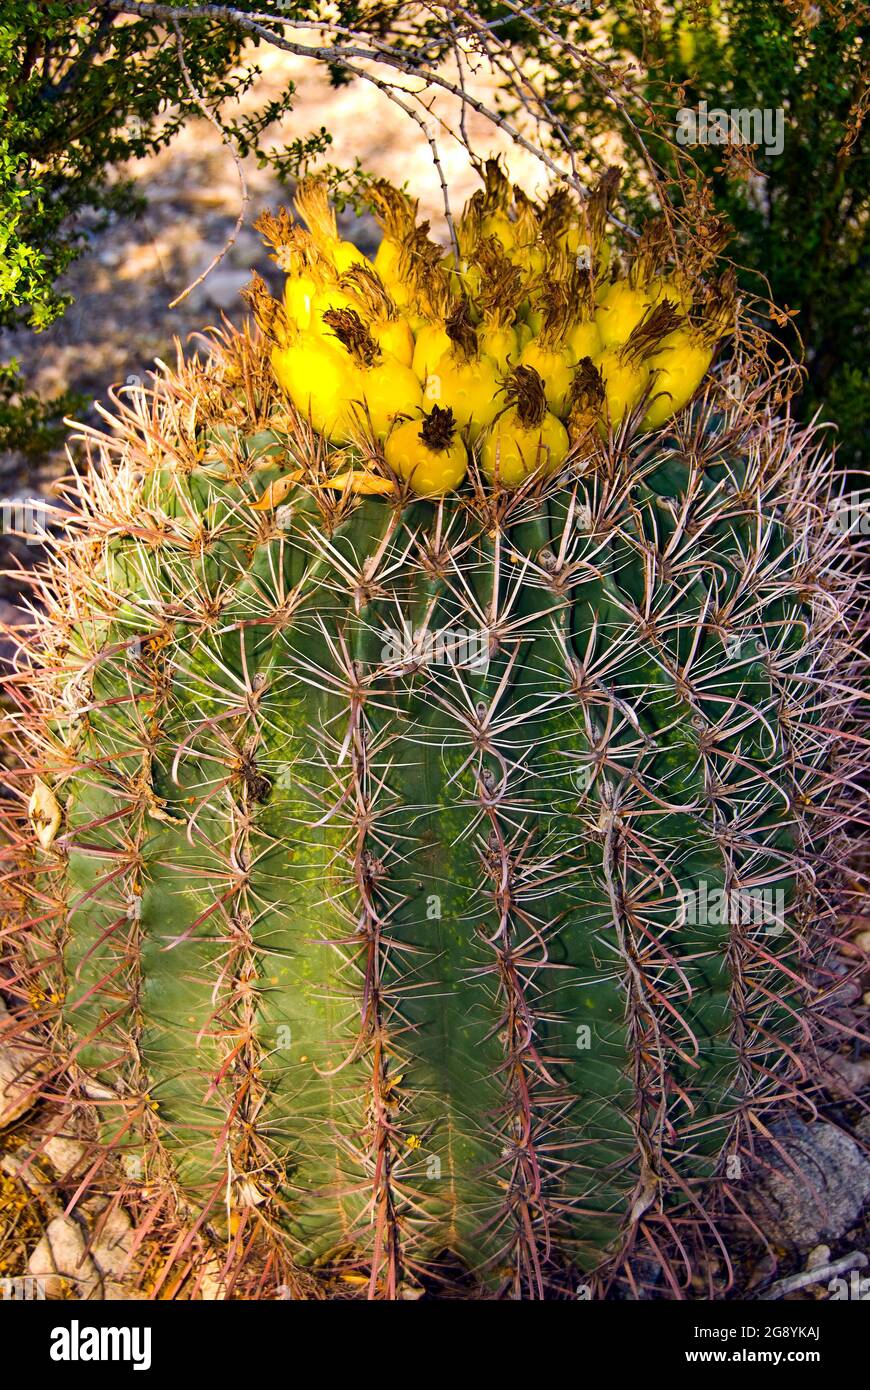 Golden Barrel Cactus: Bloom Or No Bloom 